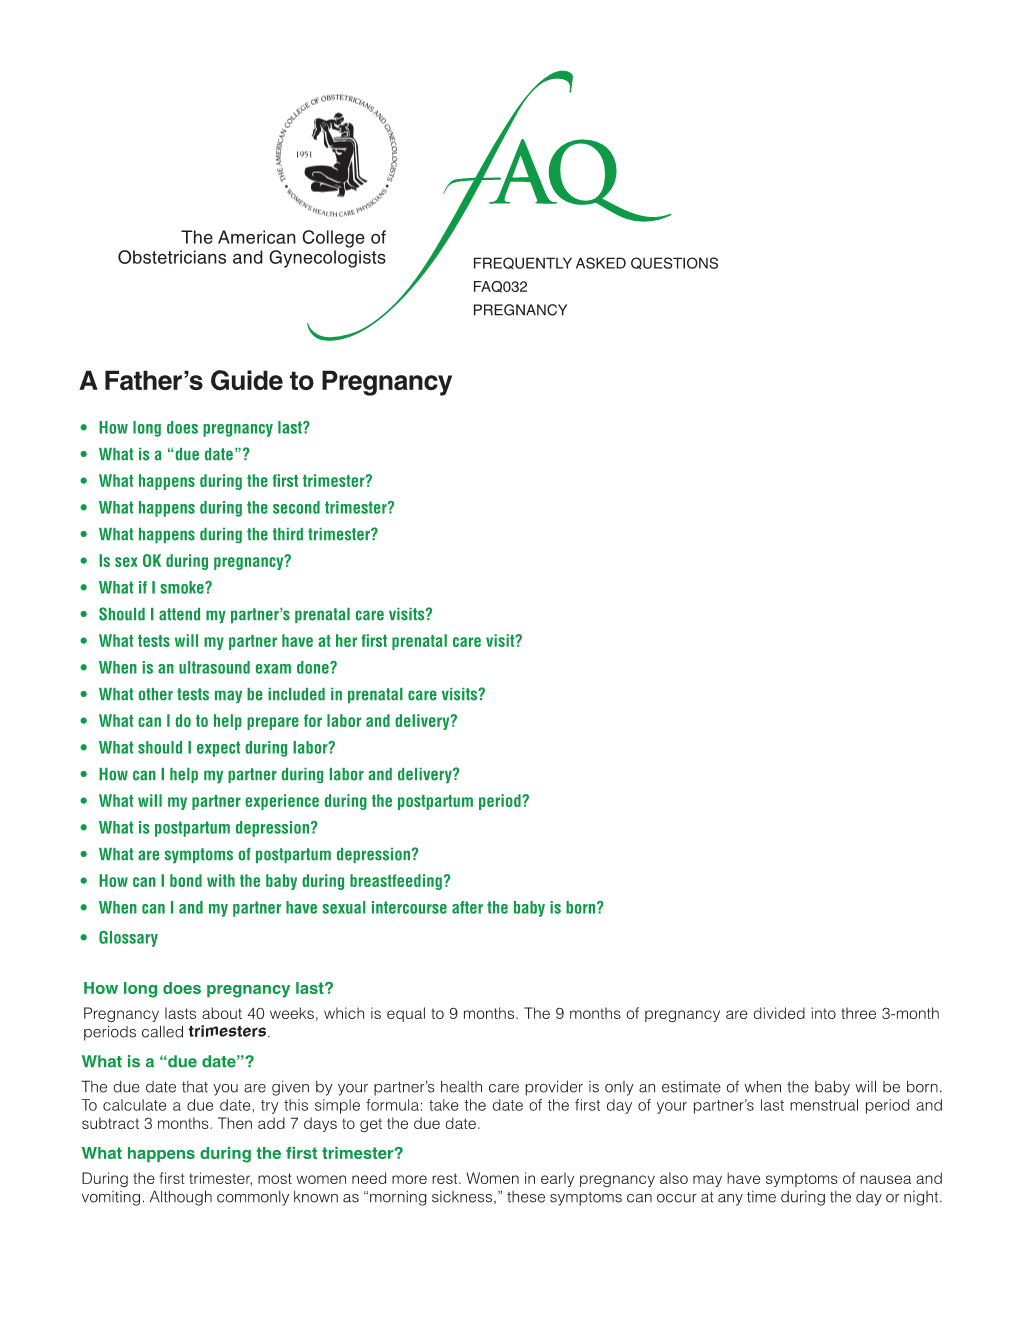 FAQ032 -- a Father's Guide to Pregnancy